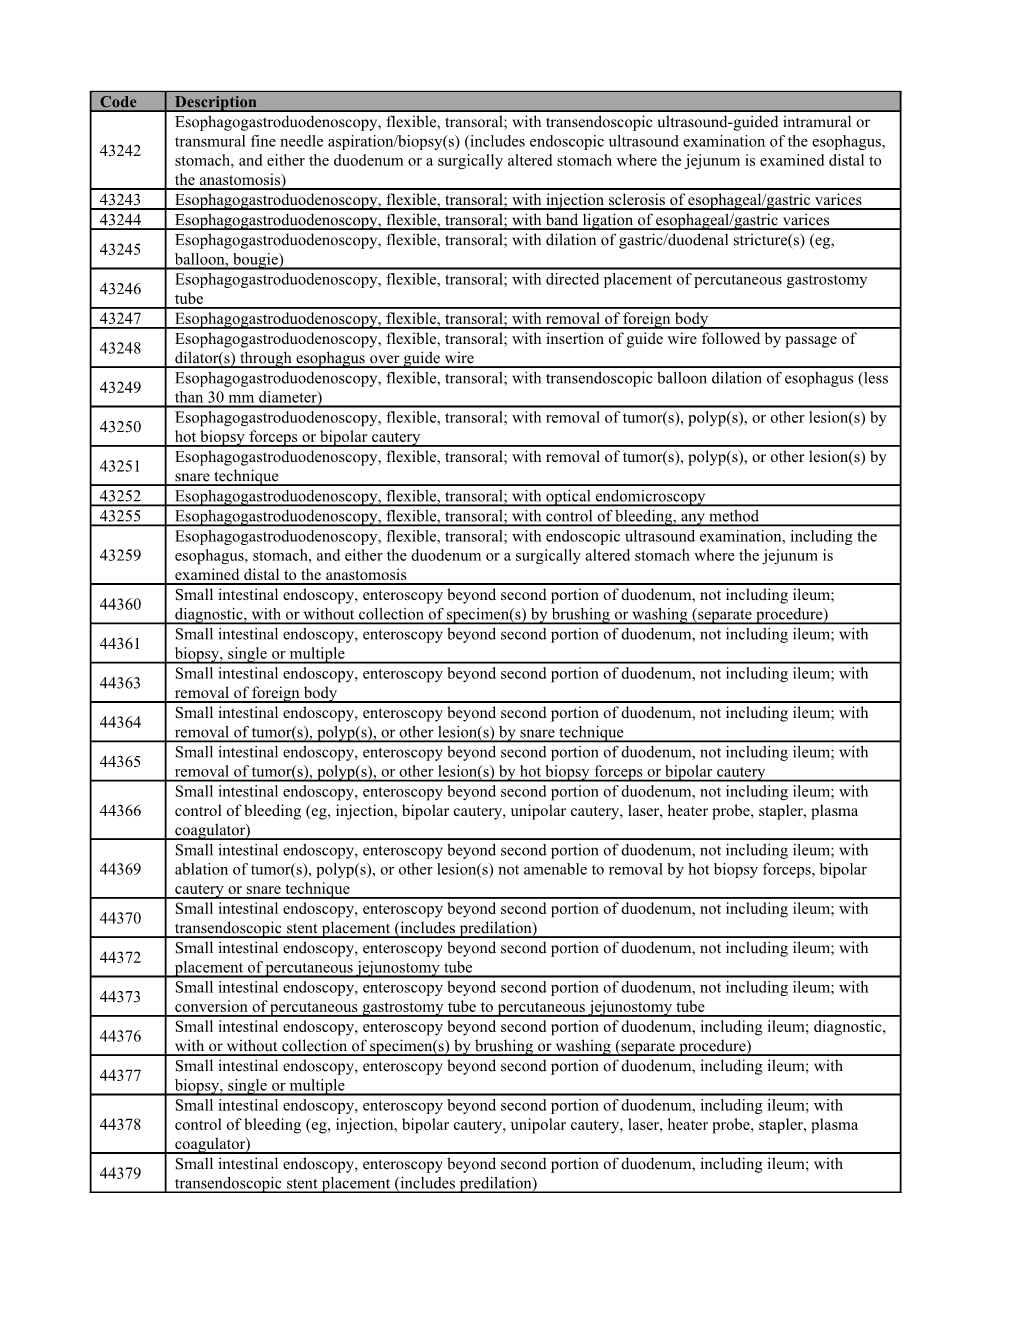 Supplemental Table 1. CPT Codes for Esophagoscopy, Small Bowel Endoscopy, Colonoscopy